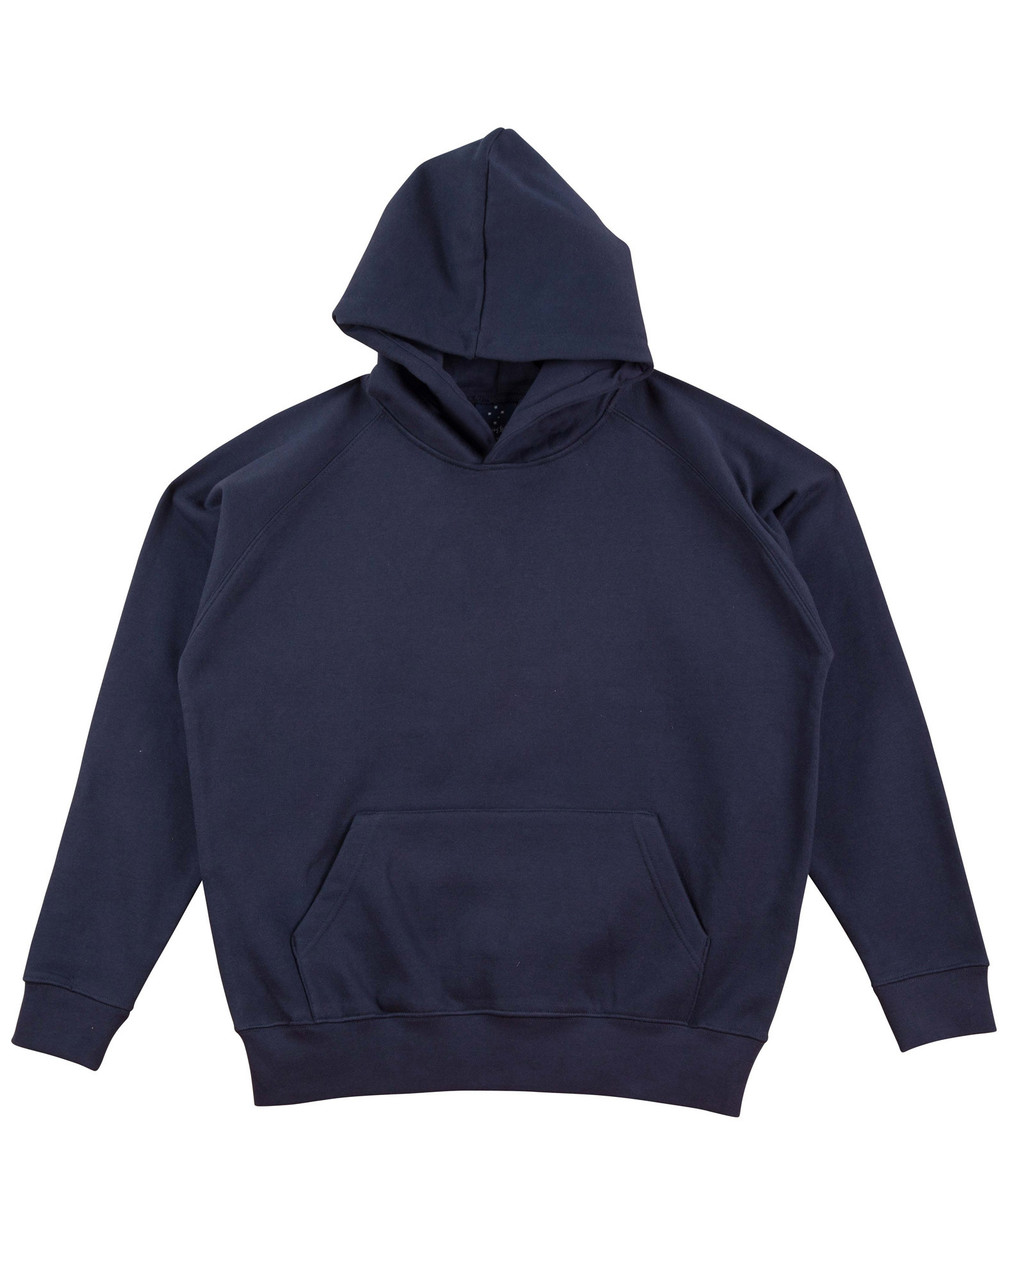 HOODIES KIDS | cotton-rich childrens hoody | plain hoodies | blank clothing